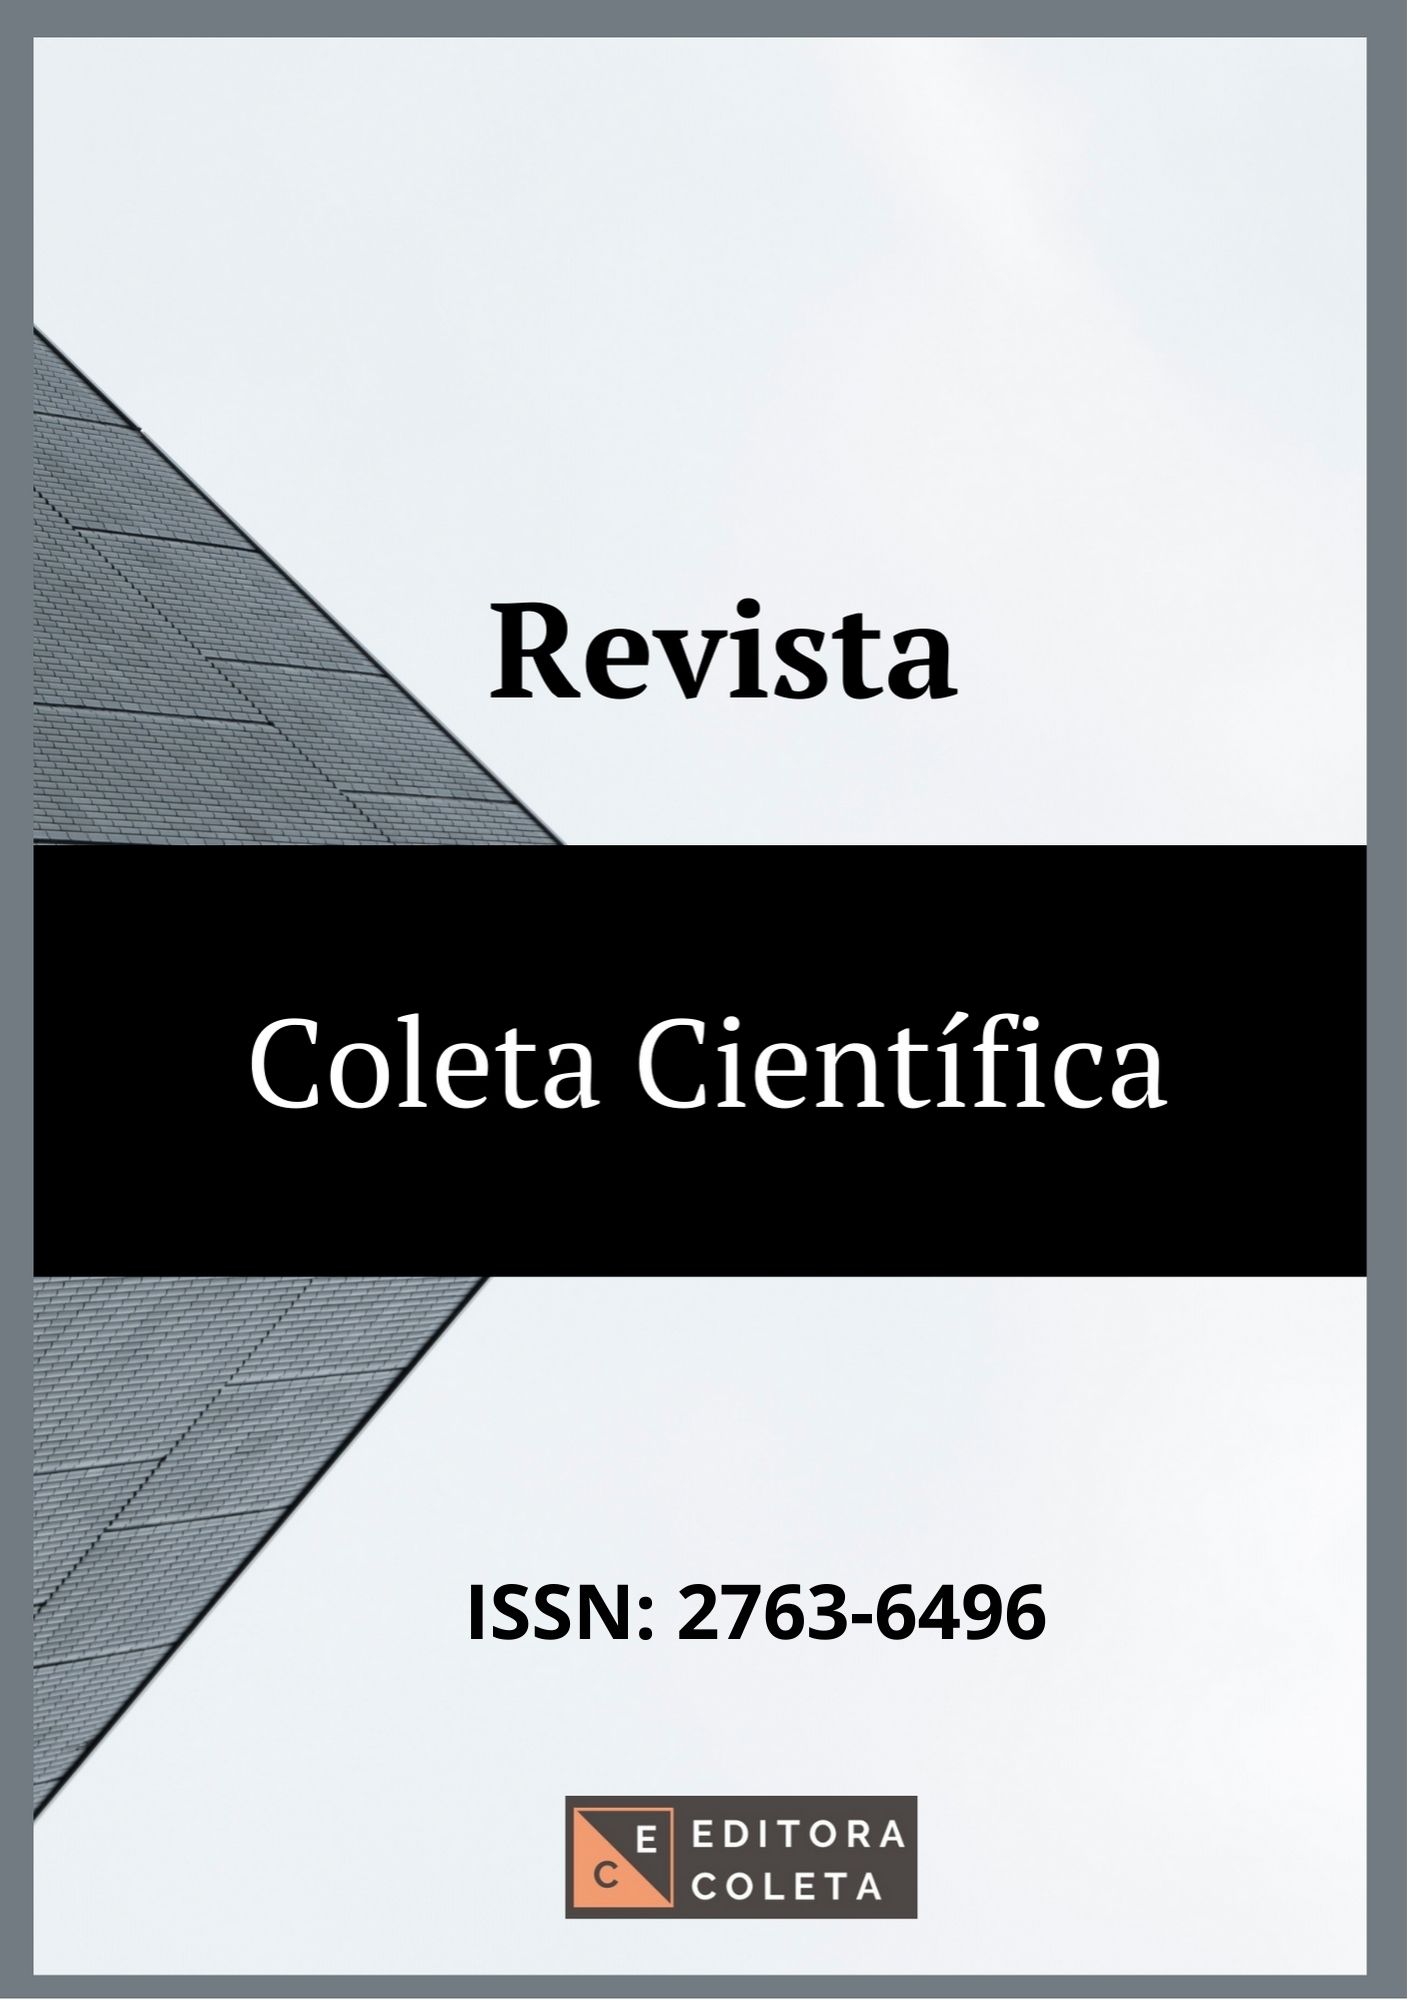 					Visualizar v. 3 n. 5 (2019): Revista Coleta Científica
				